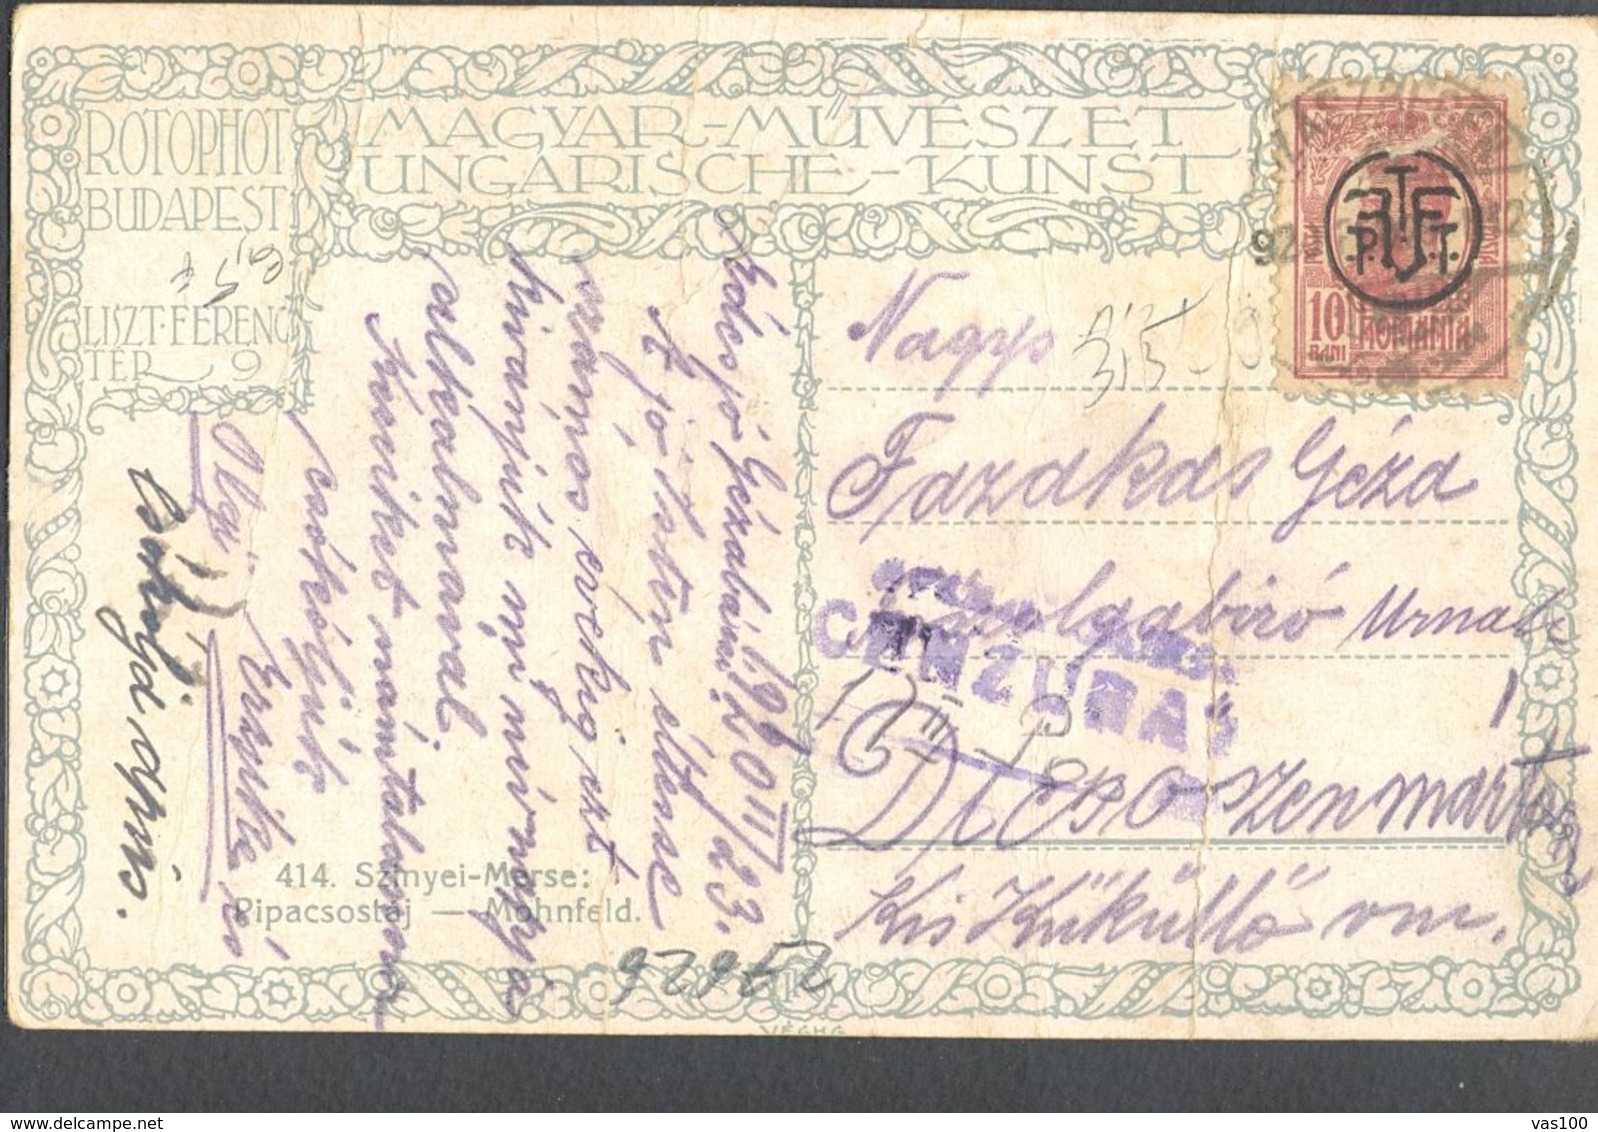 WW1 CENSORSHIP ON SZMYEI- POPPY FIELD PAINTING POSTCARD, 1920, ROMANIA - Storia Postale Prima Guerra Mondiale